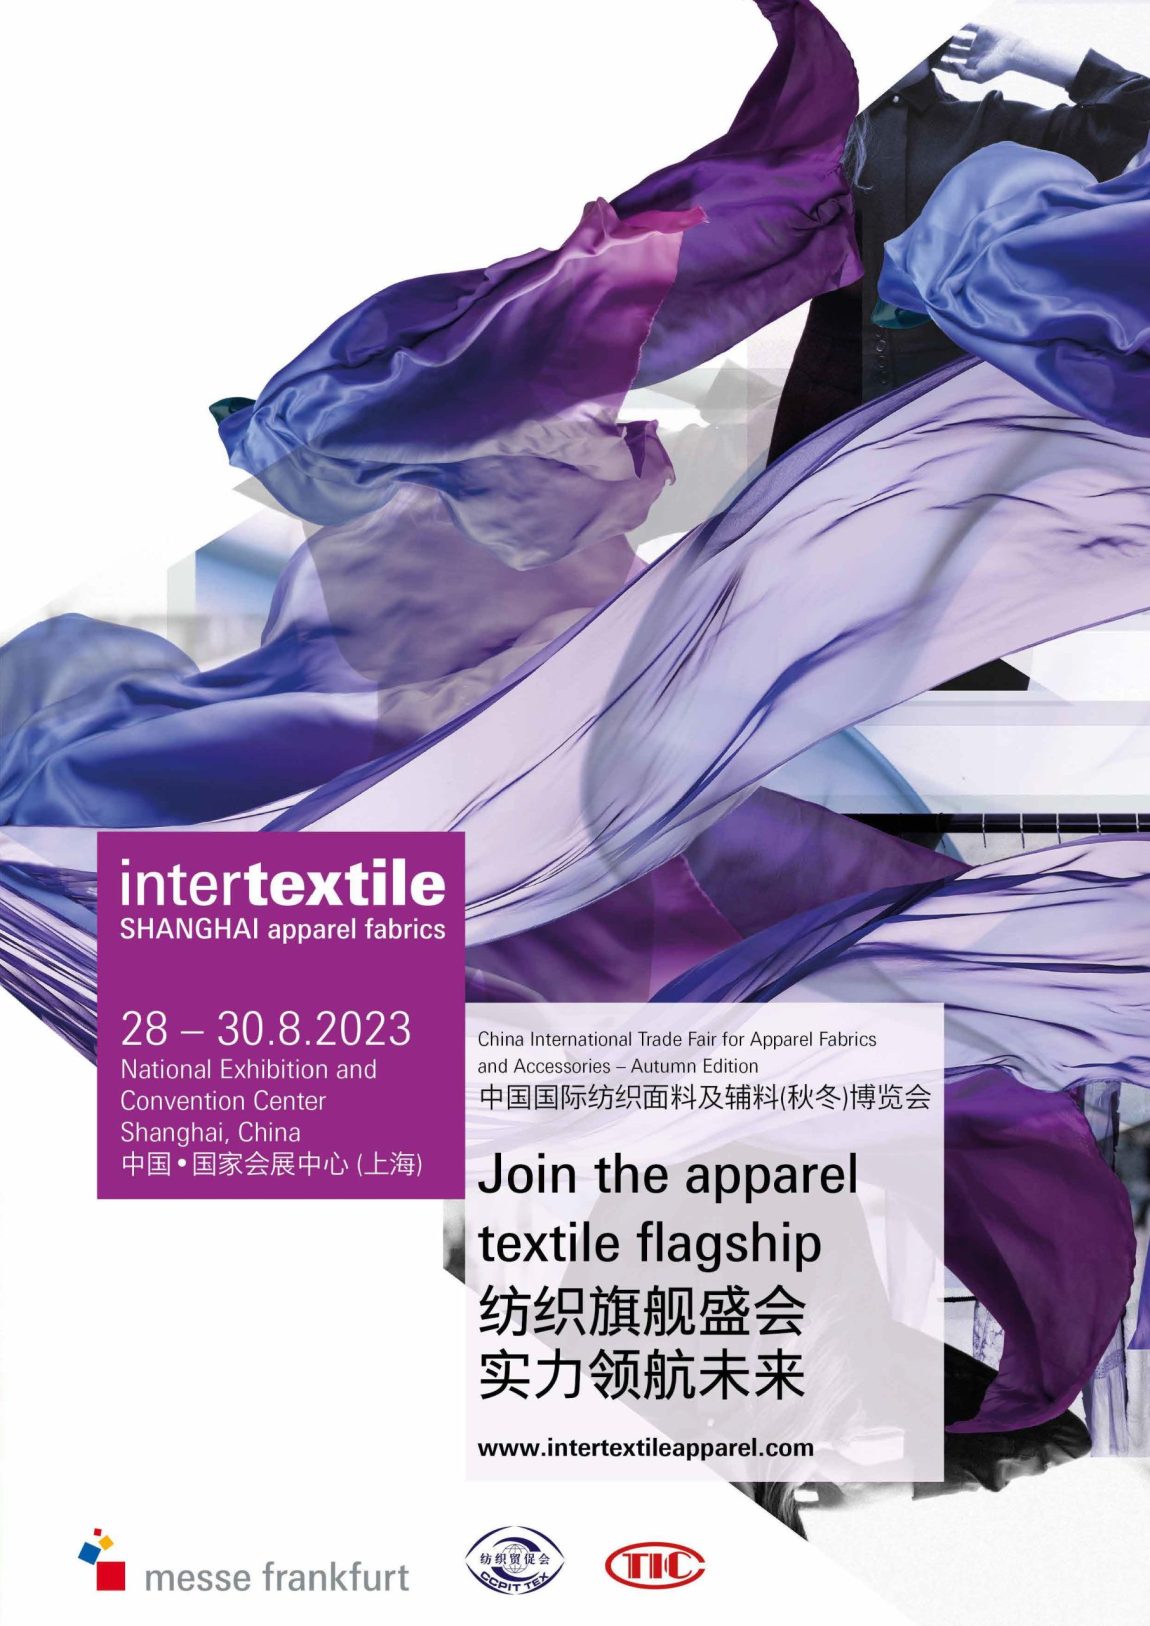 Invitation to attend the 2023 Autumn Editions Intertextile Shanghai Apparel Fabrics Fair : 28-30 August 2023